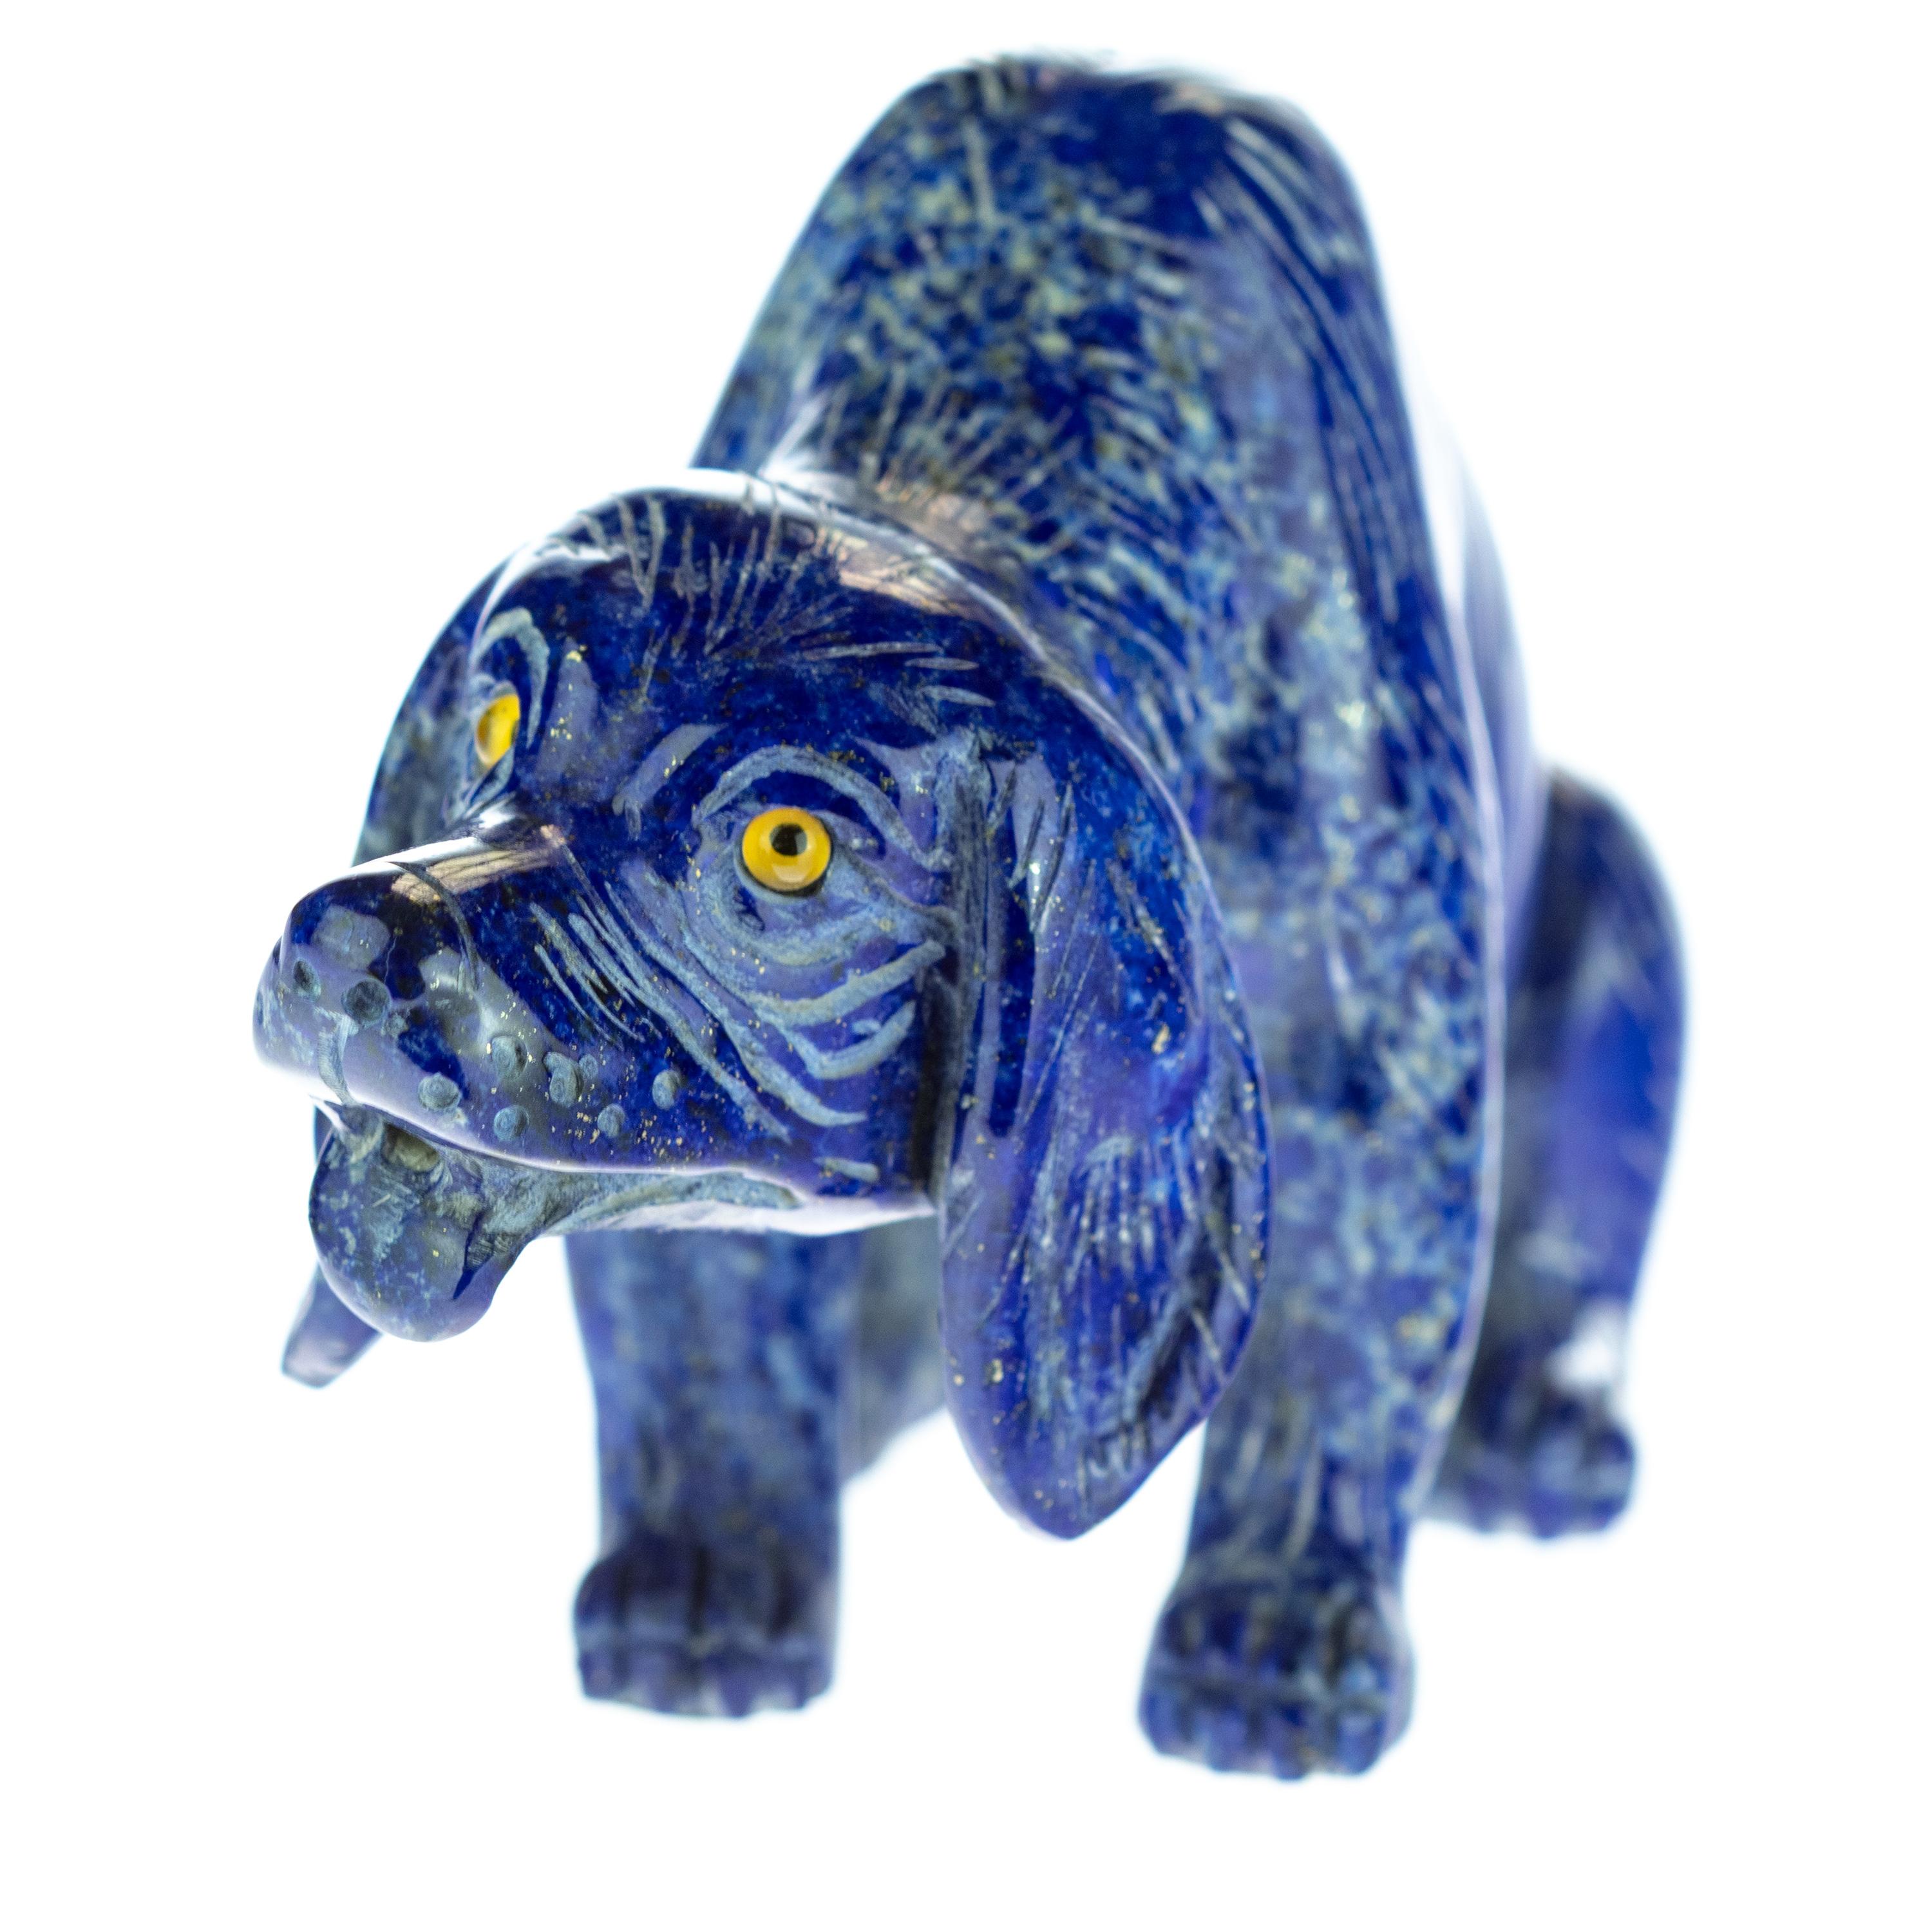 Hong Kong Lapis Lazuli Blue Dog Figurine Carved Animal Artisanal Statue Sculpture For Sale